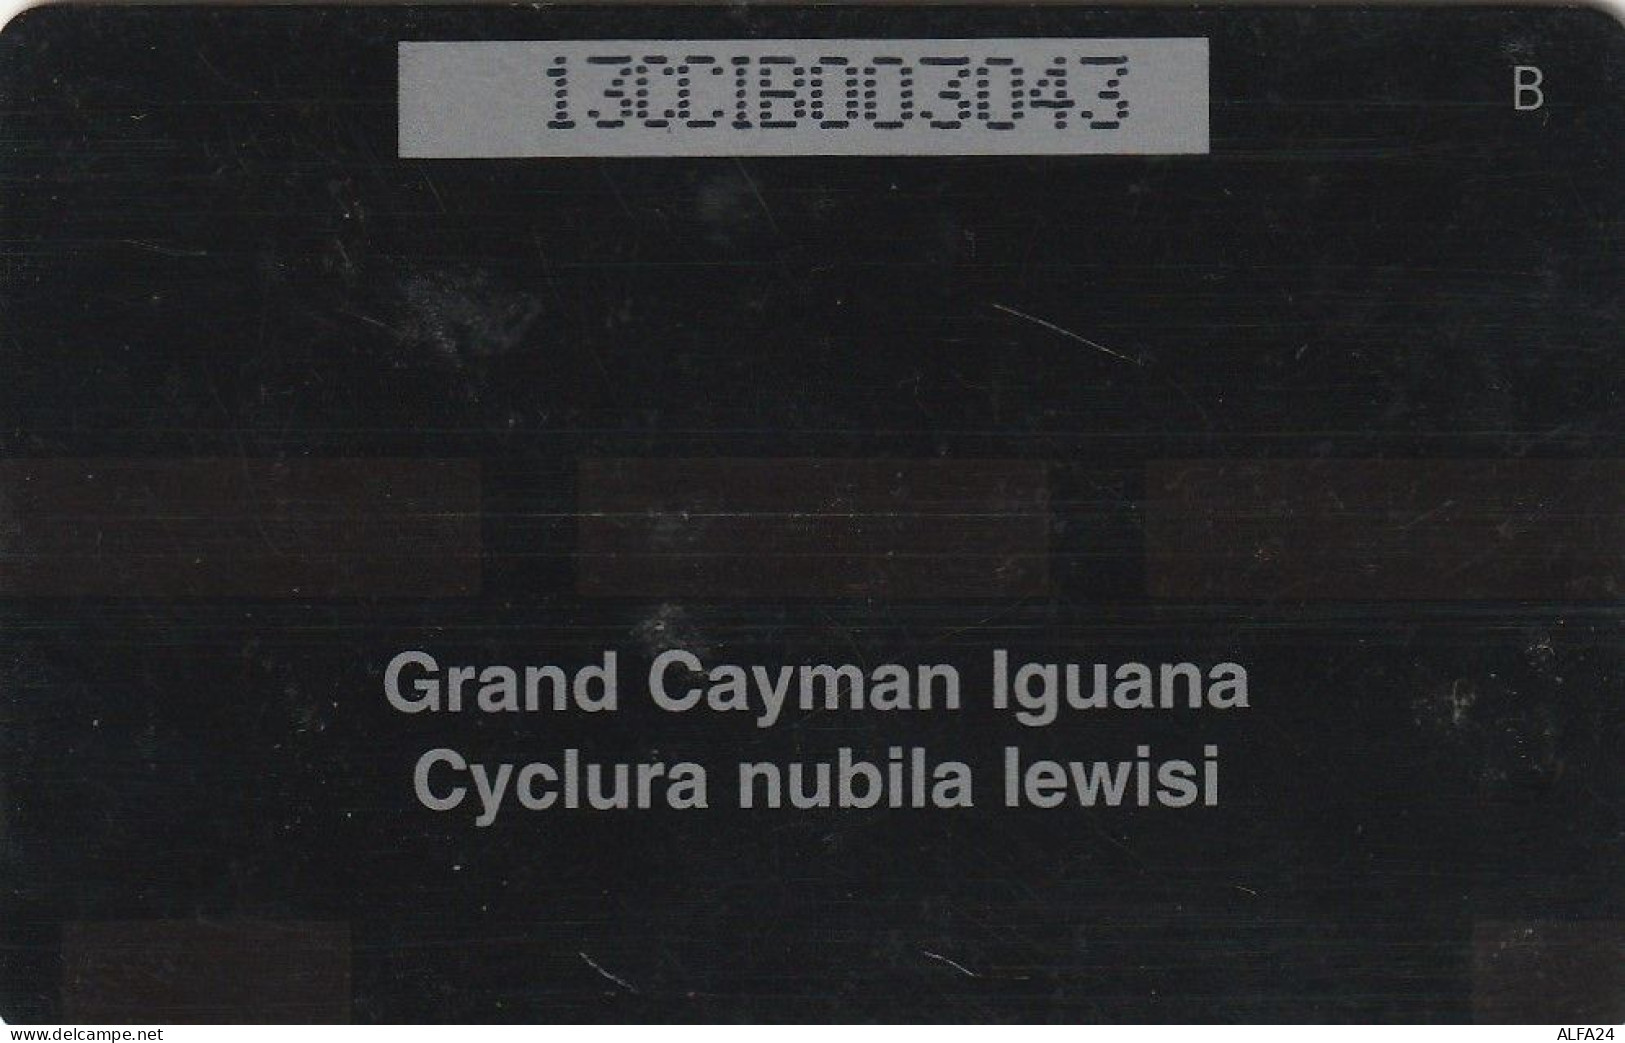 PHONE CARD CAYMAN ISLANDS  (E51.6.7 - Cayman Islands